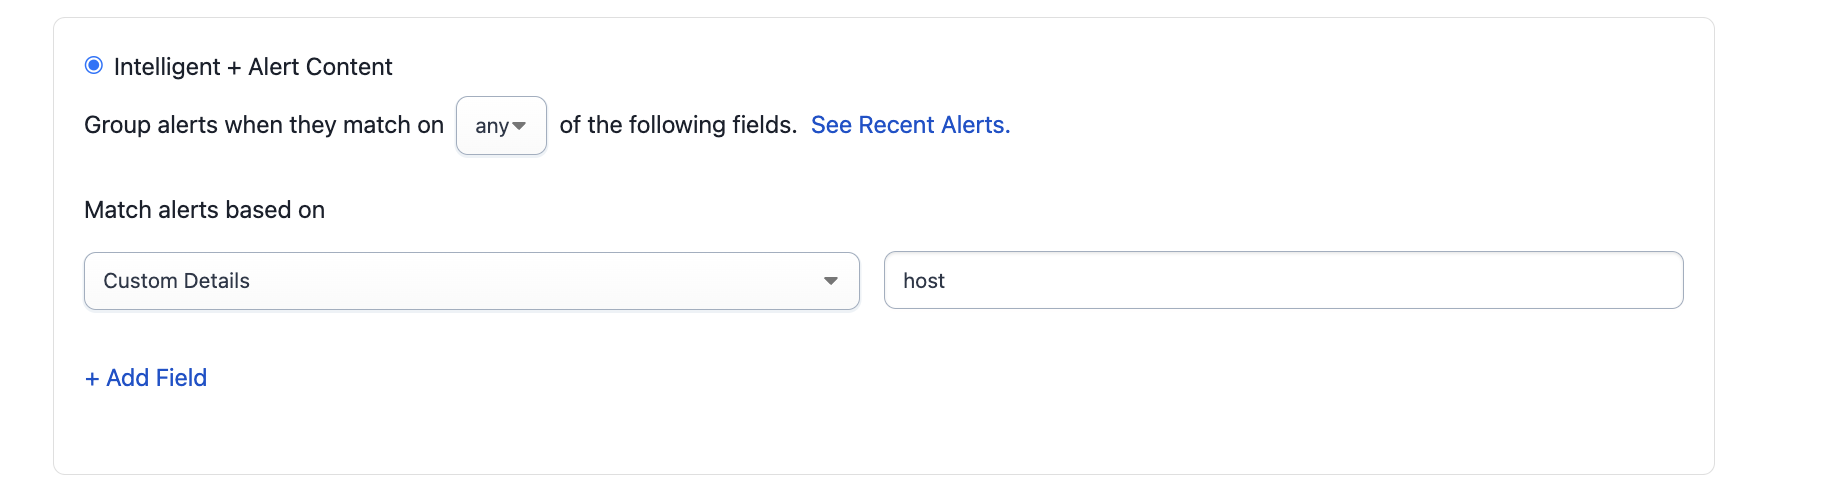 Unified Alert Grouping: custom_details.host